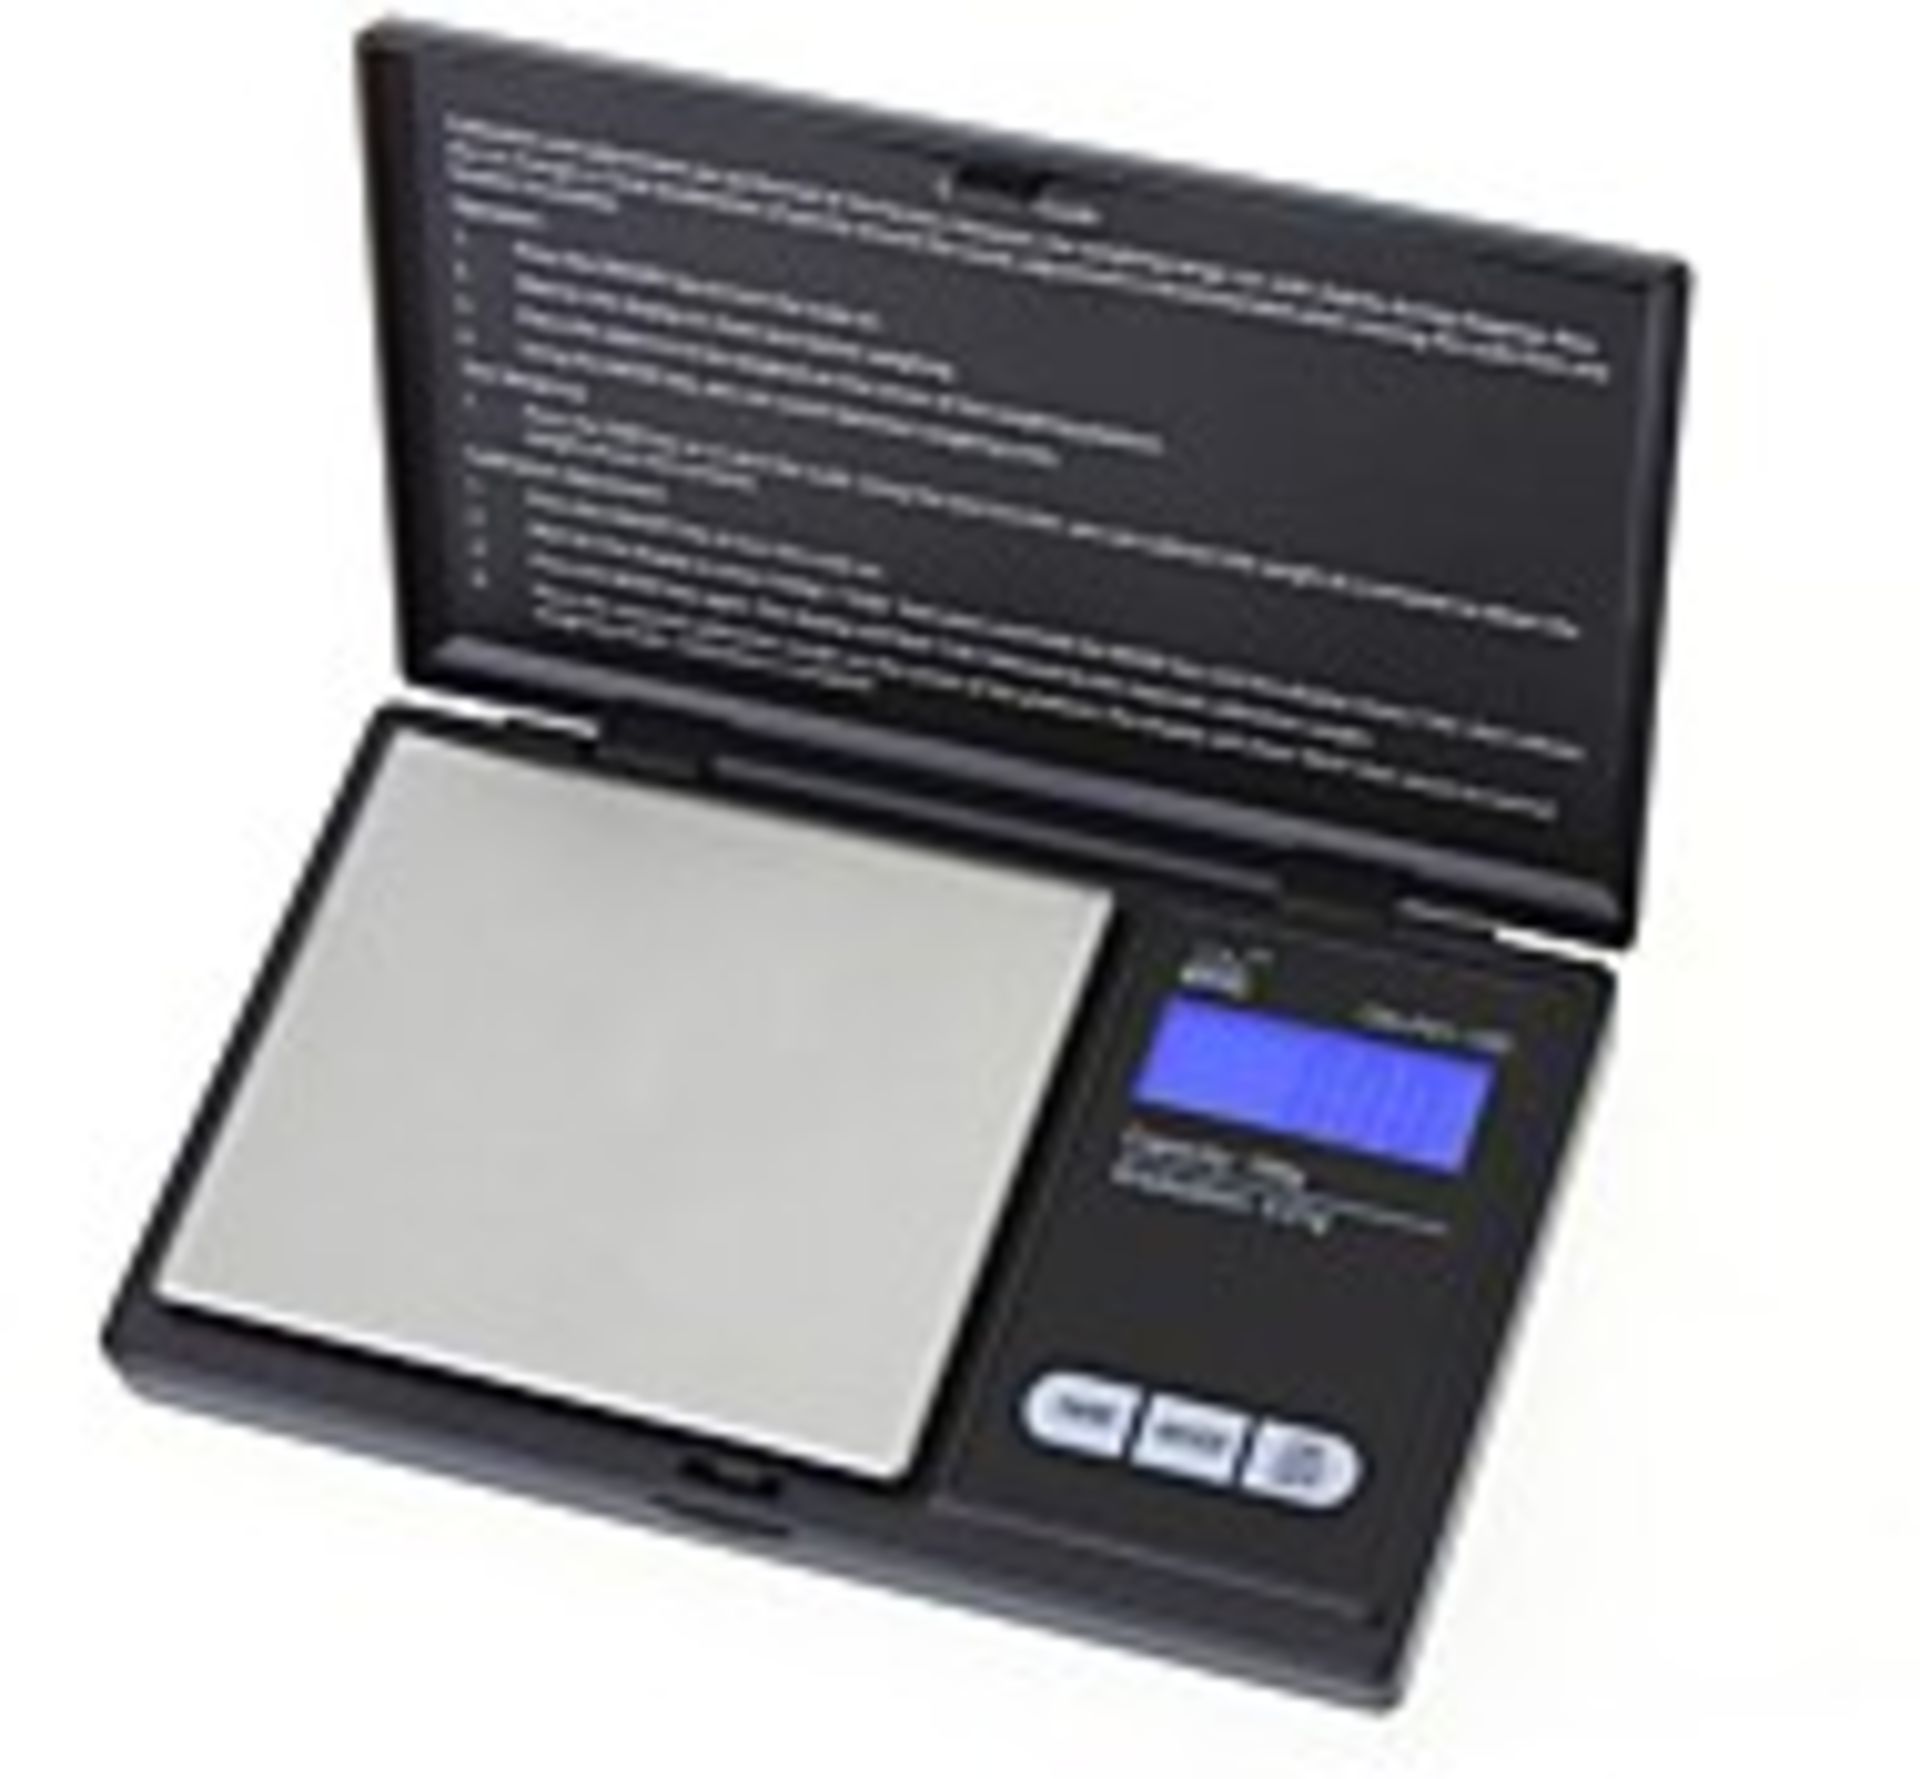 V *TRADE QTY* Brand New Professional Digital Mini Scales (500 gram x 0.1 gram) X 8 YOUR BID PRICE TO